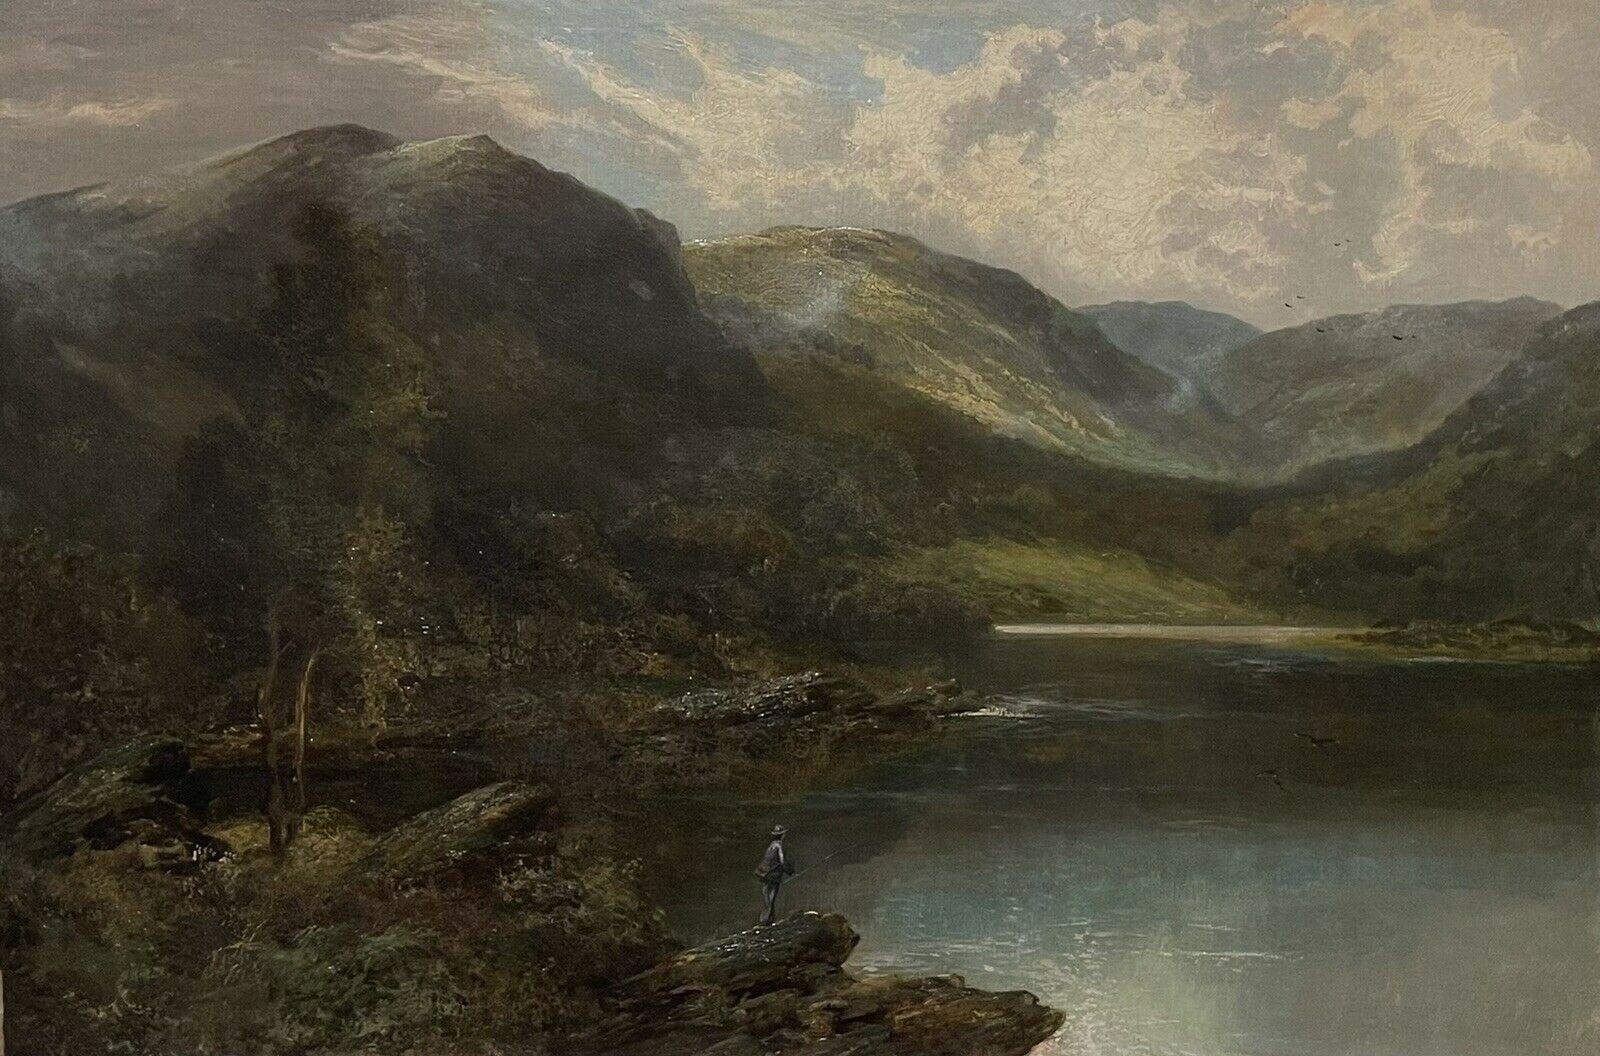 Antique Scottish Landscape Painting - Large Scottish Highlands Loch Landscape, 19th century Victorian Oil Painting